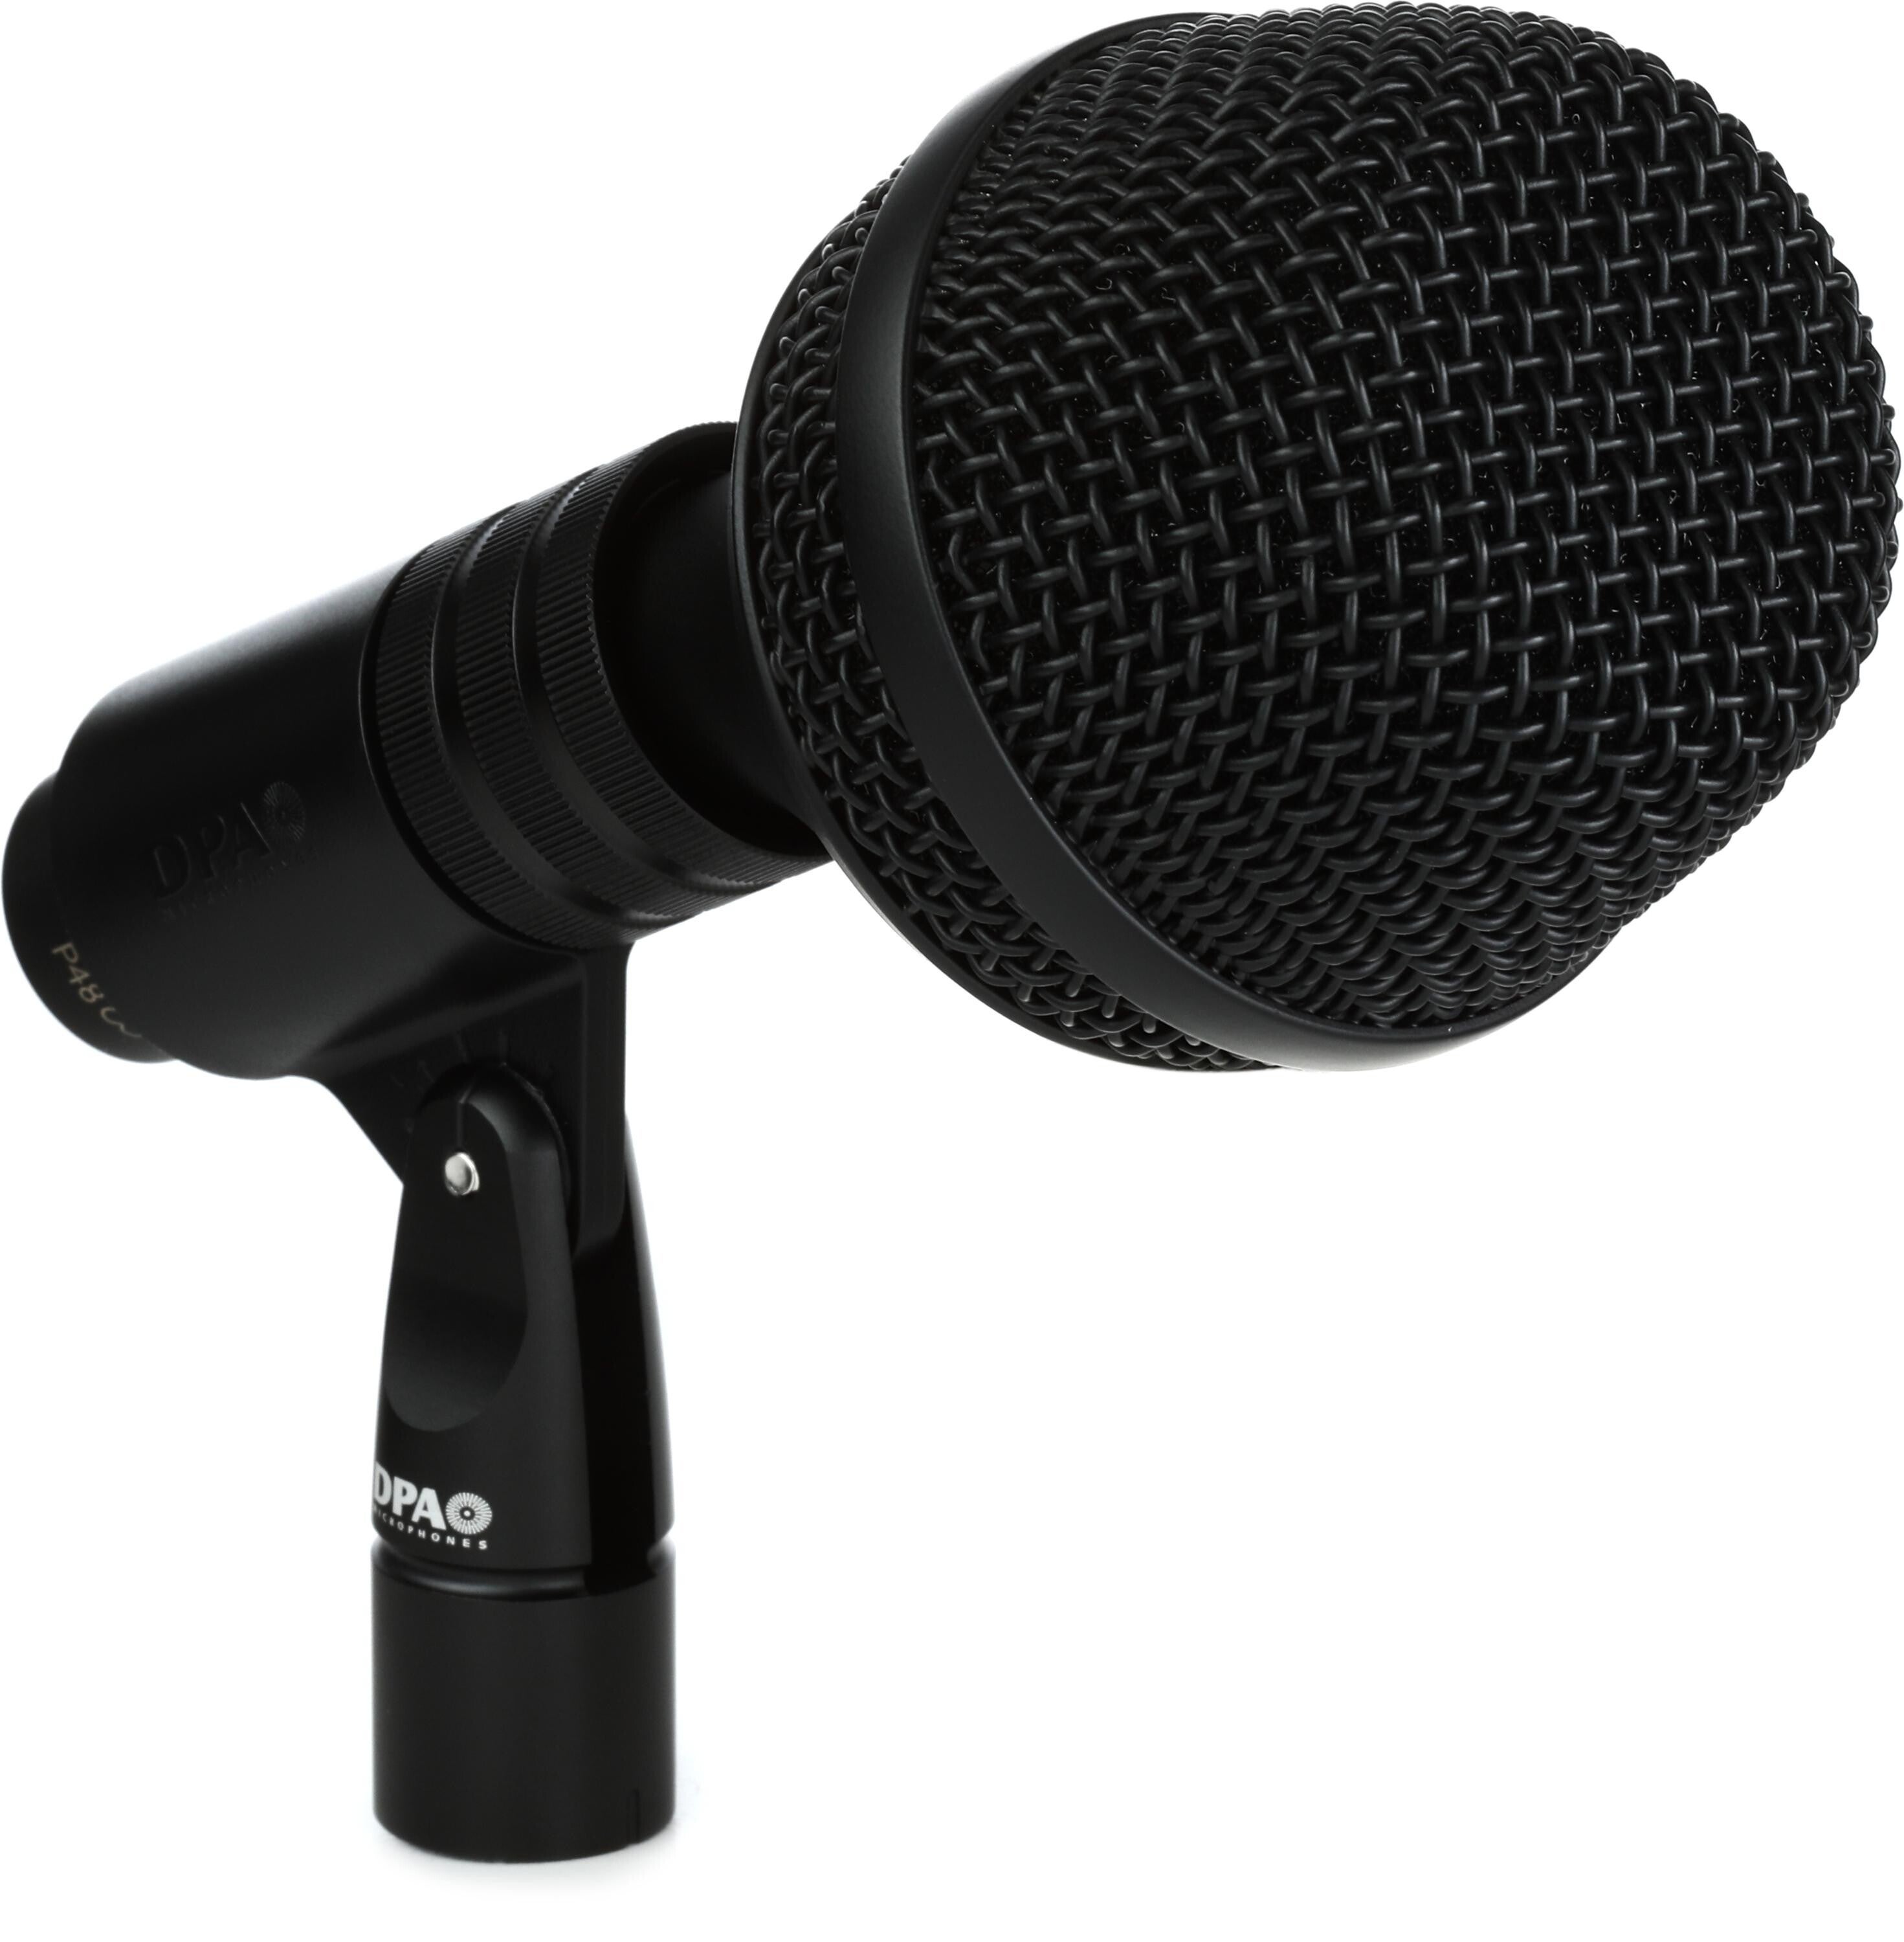 DPA 4055 Kick-Drum Microphone